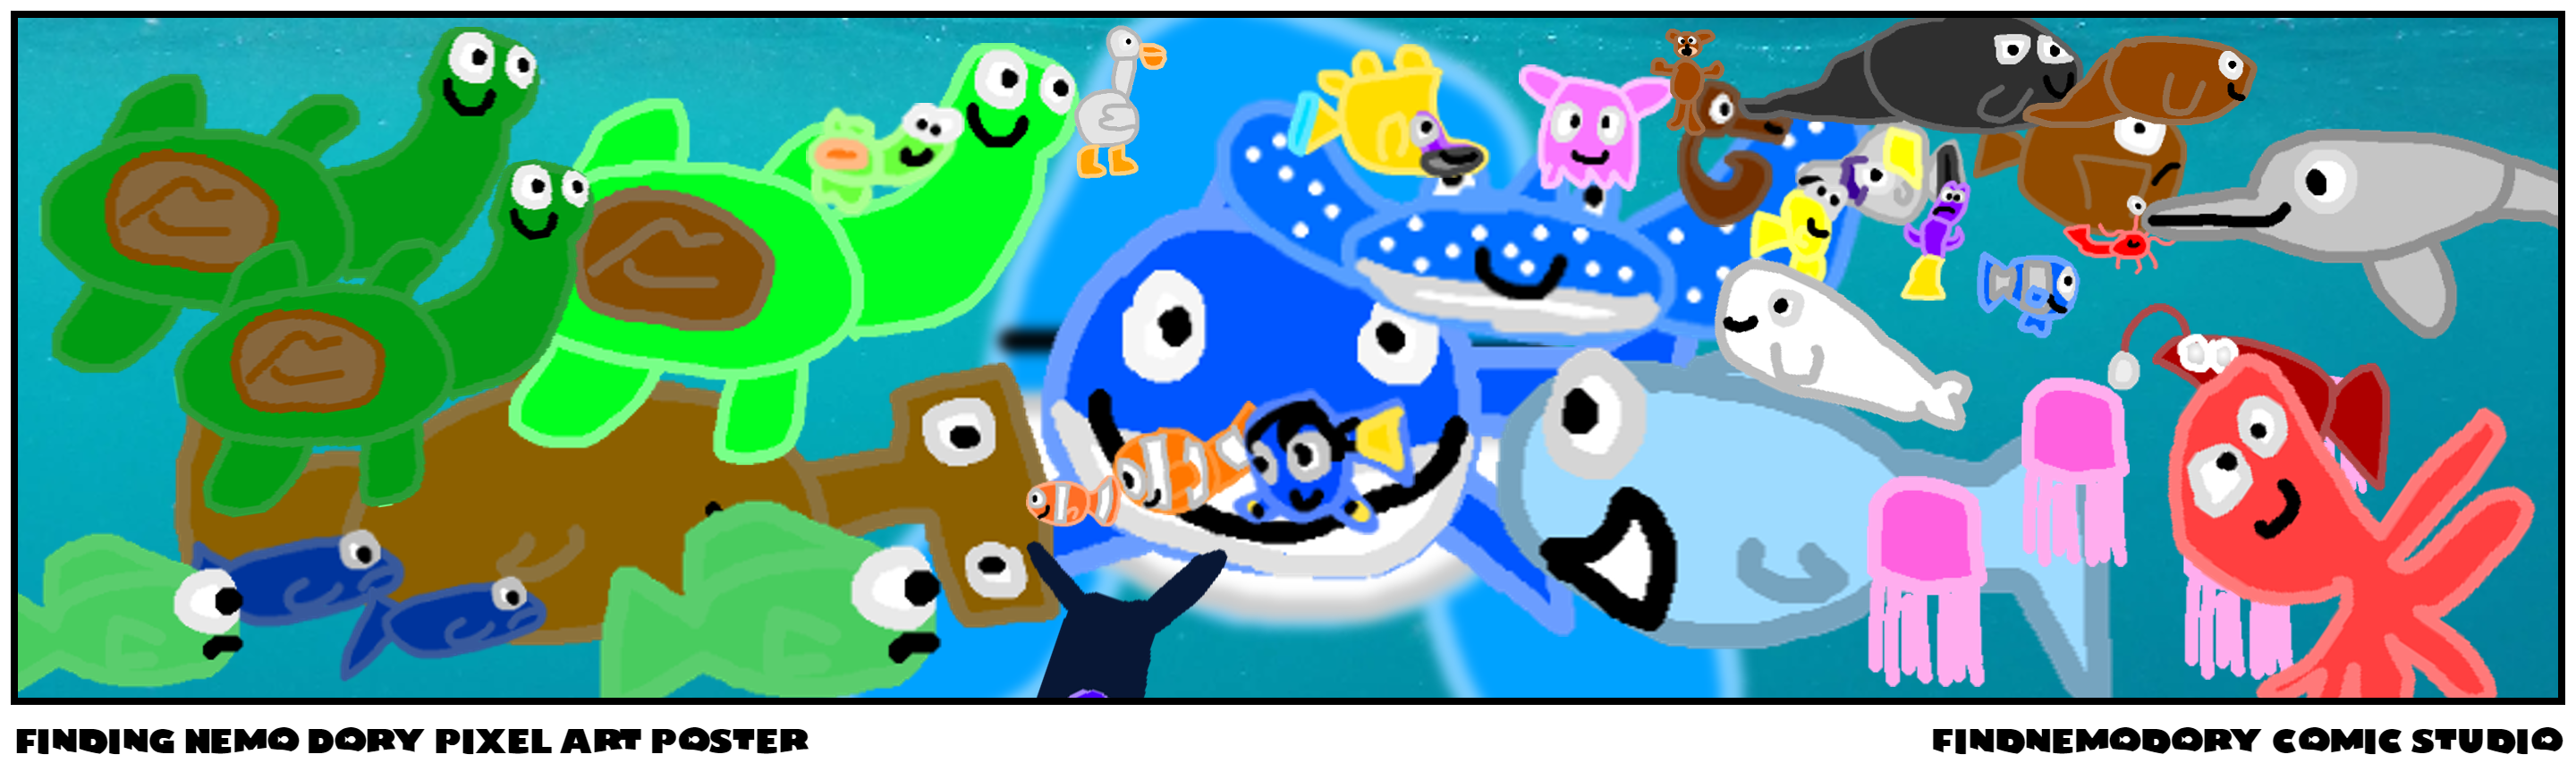 Finding Nemo Dory Pixel Art Poster